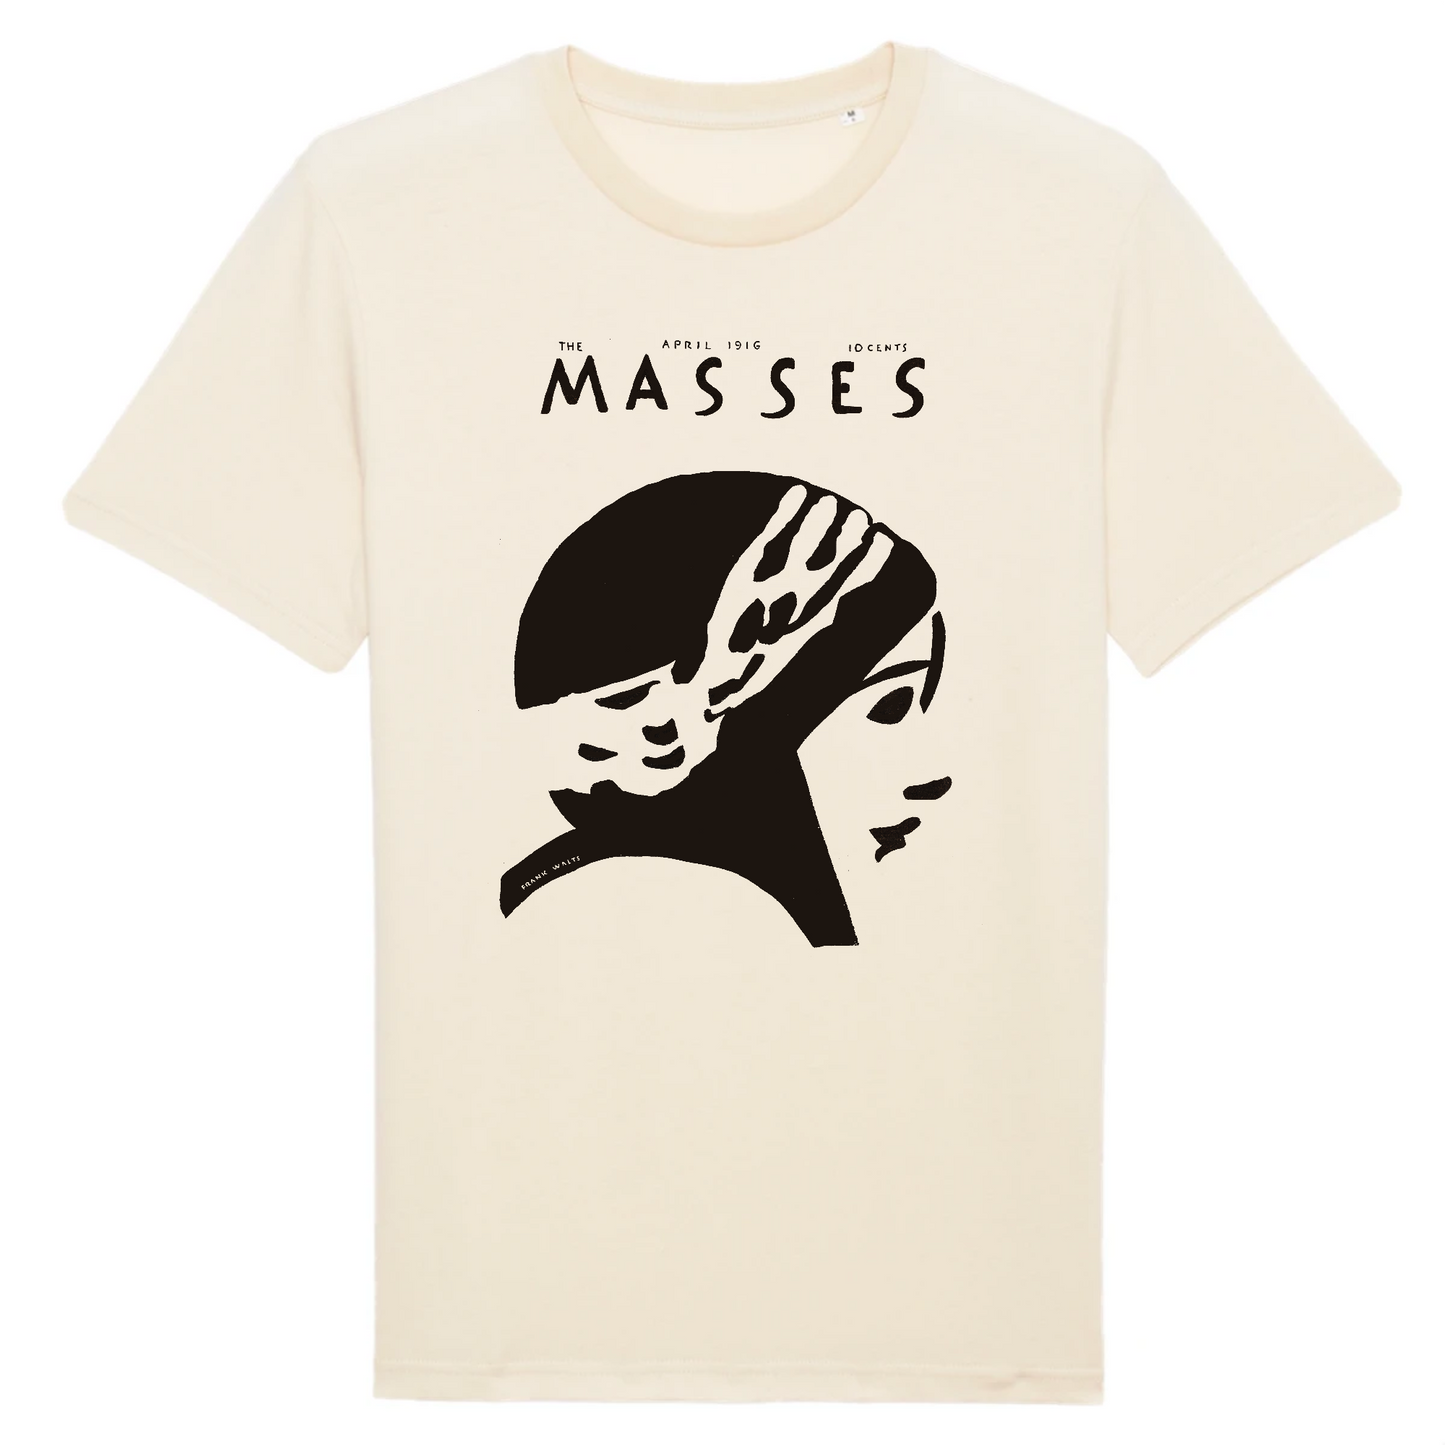 Masses by Frank Walts, 1916 -  Organic Cotton T-Shirt